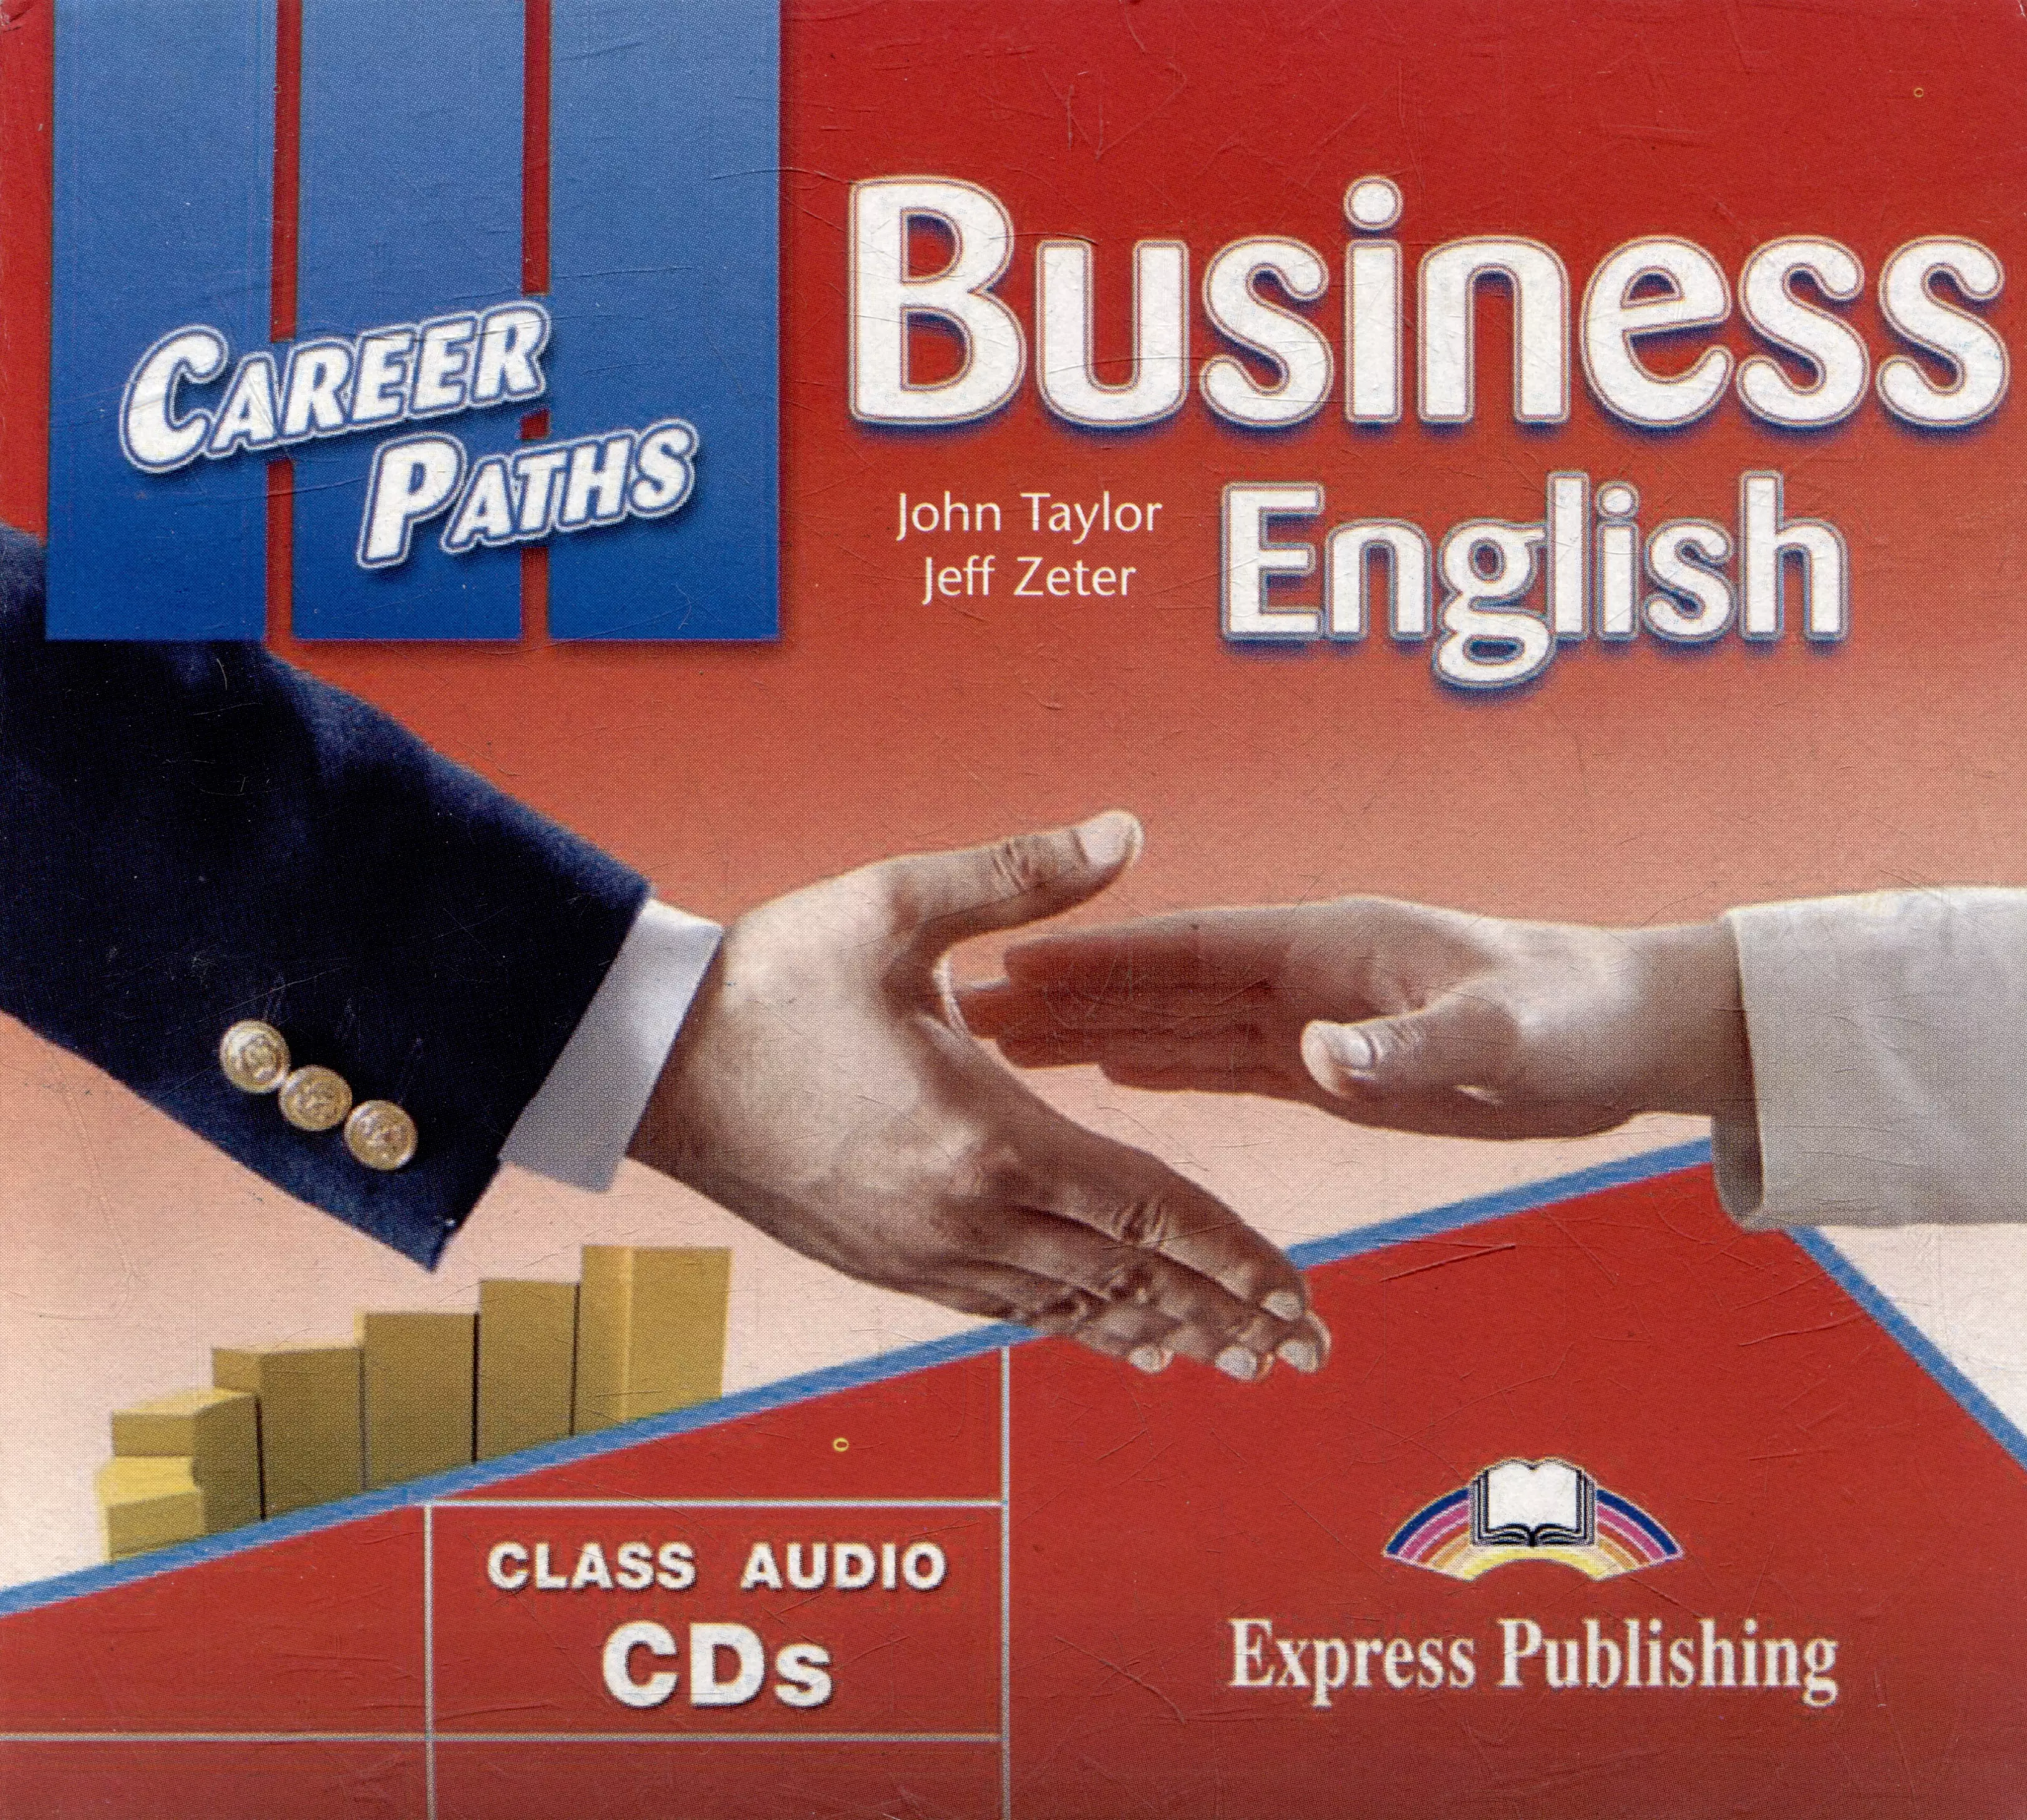 Аудио english. John Taylor, Jeff Zeter «Business English».. Бизнес английский. Деловой английский. Career Paths: Business English.